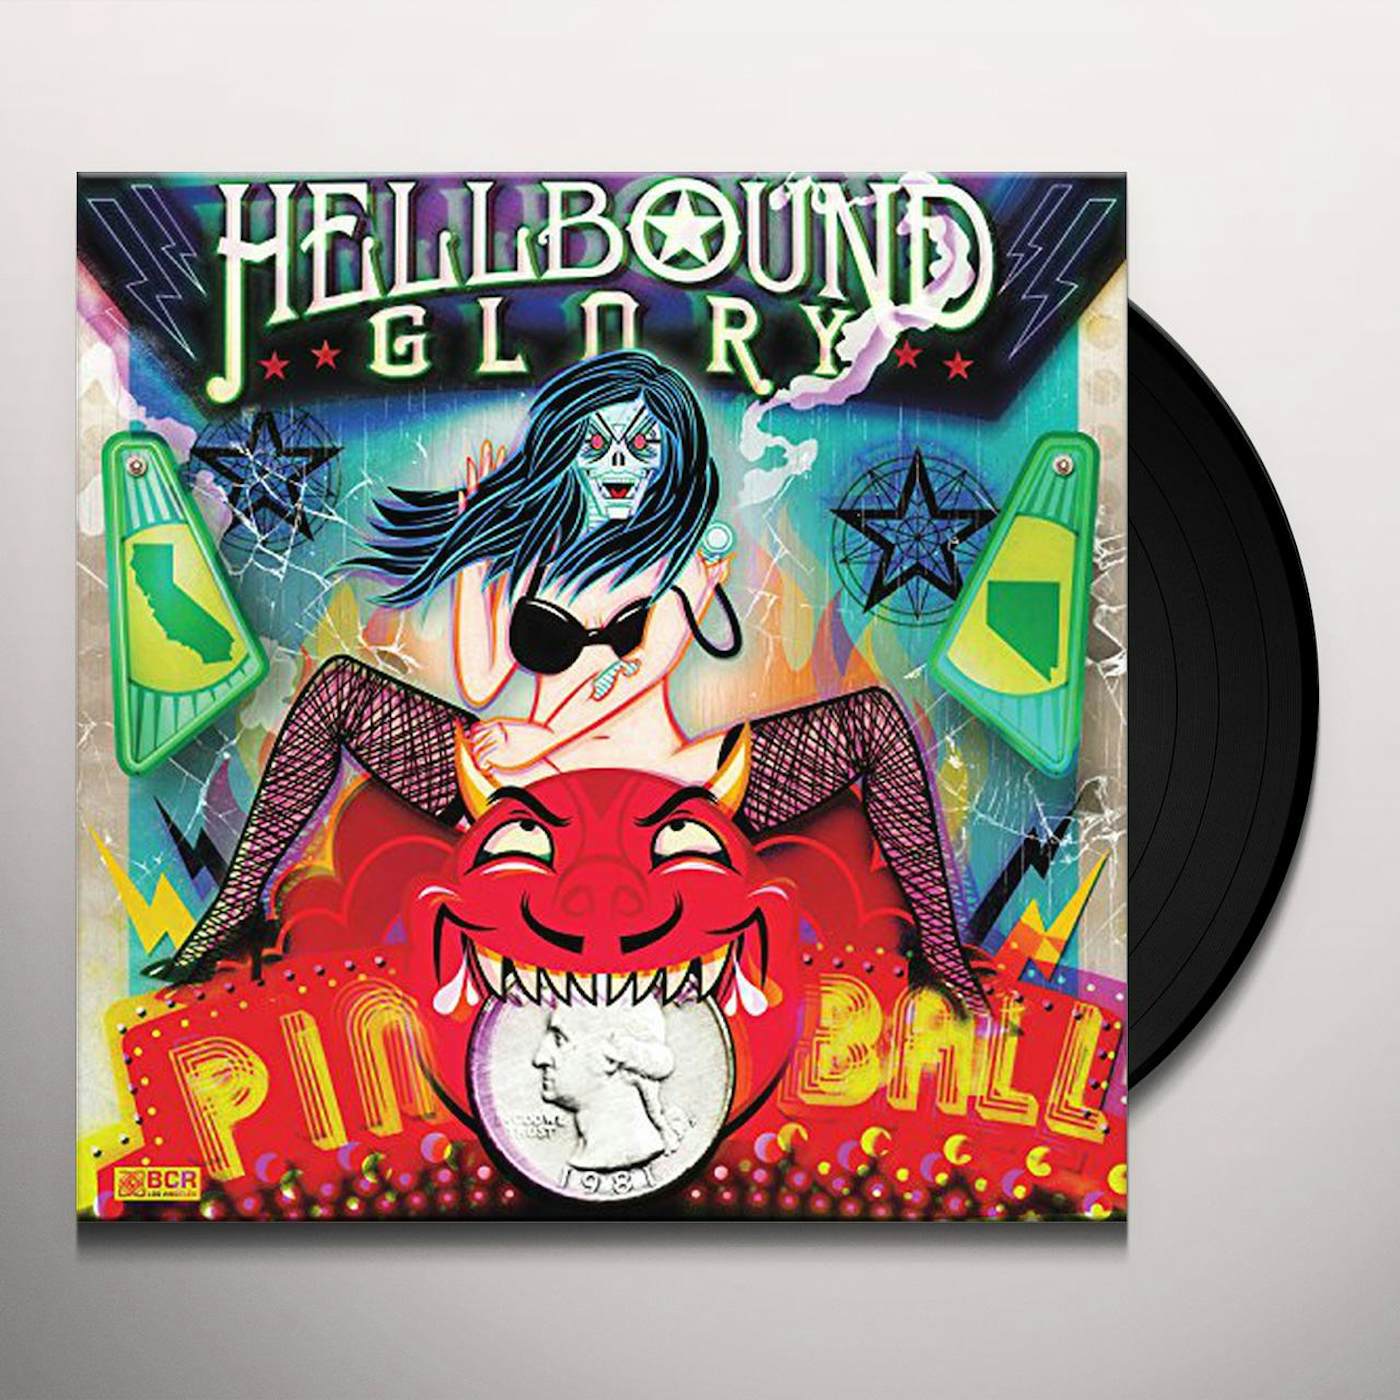 Hellbound Glory Pinball Vinyl Record